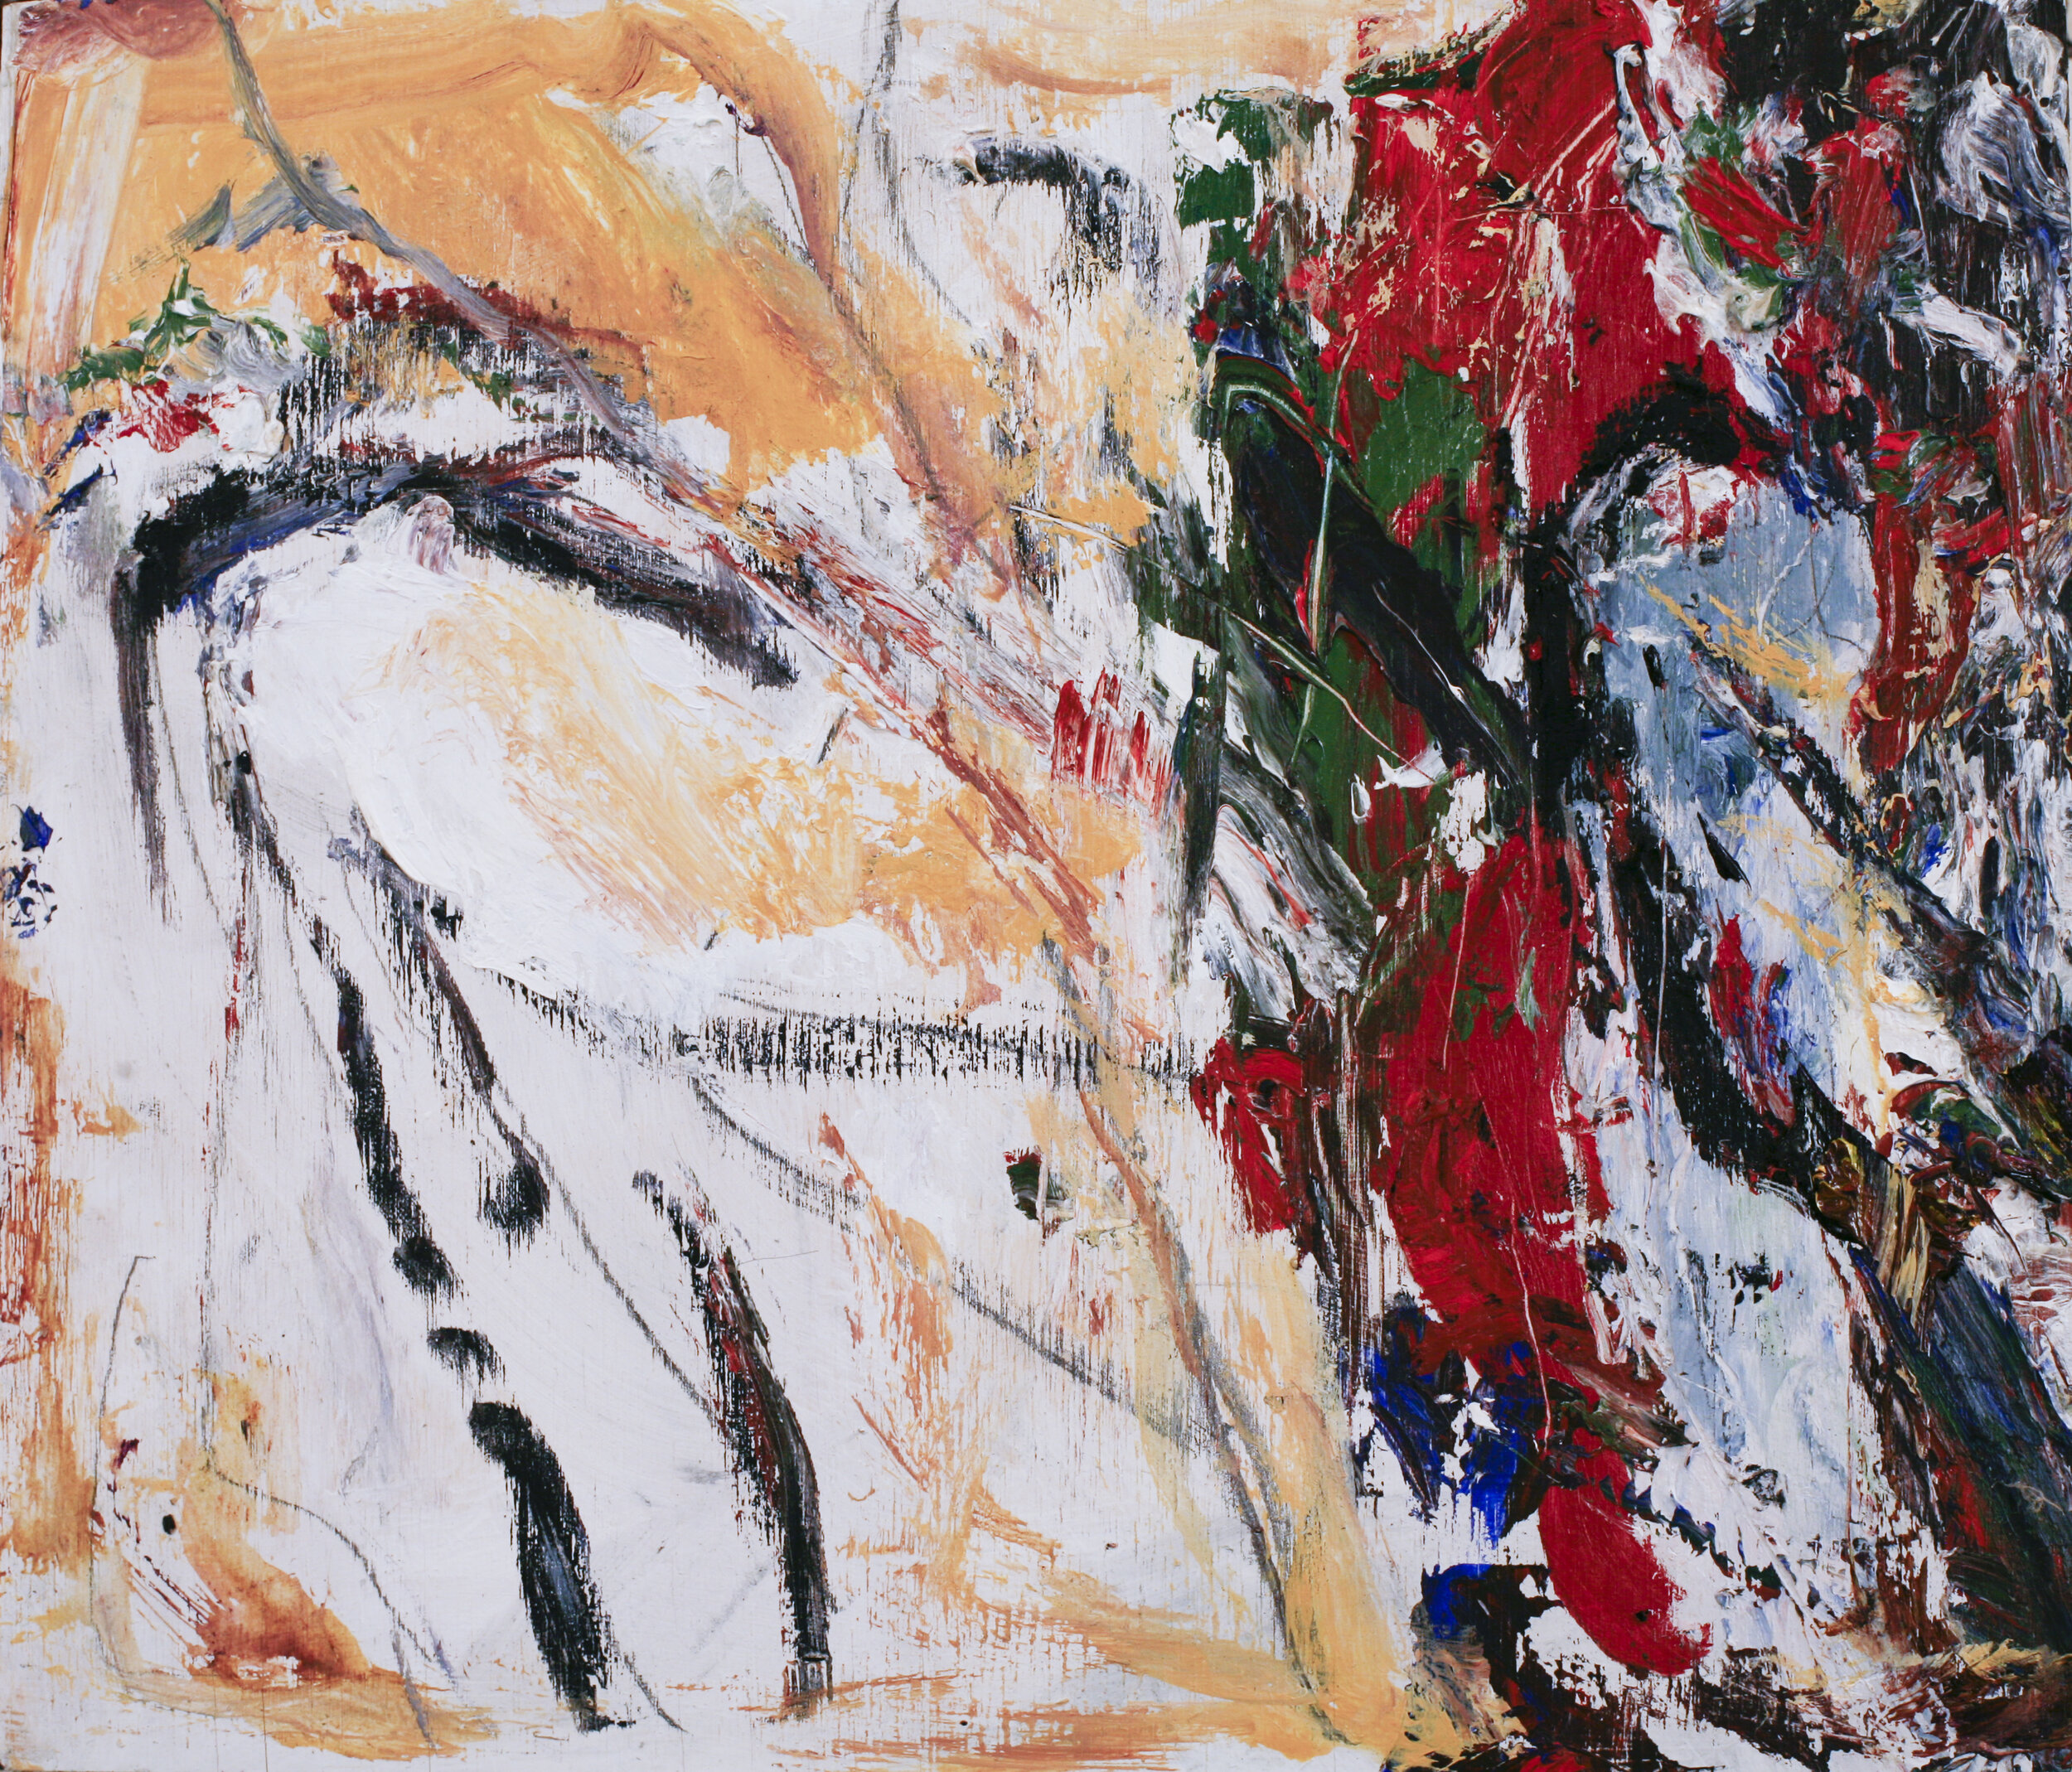 "The  Whisperer", 12"x14", acrylic, graphite, oil sitck on panel, 6-16-'14